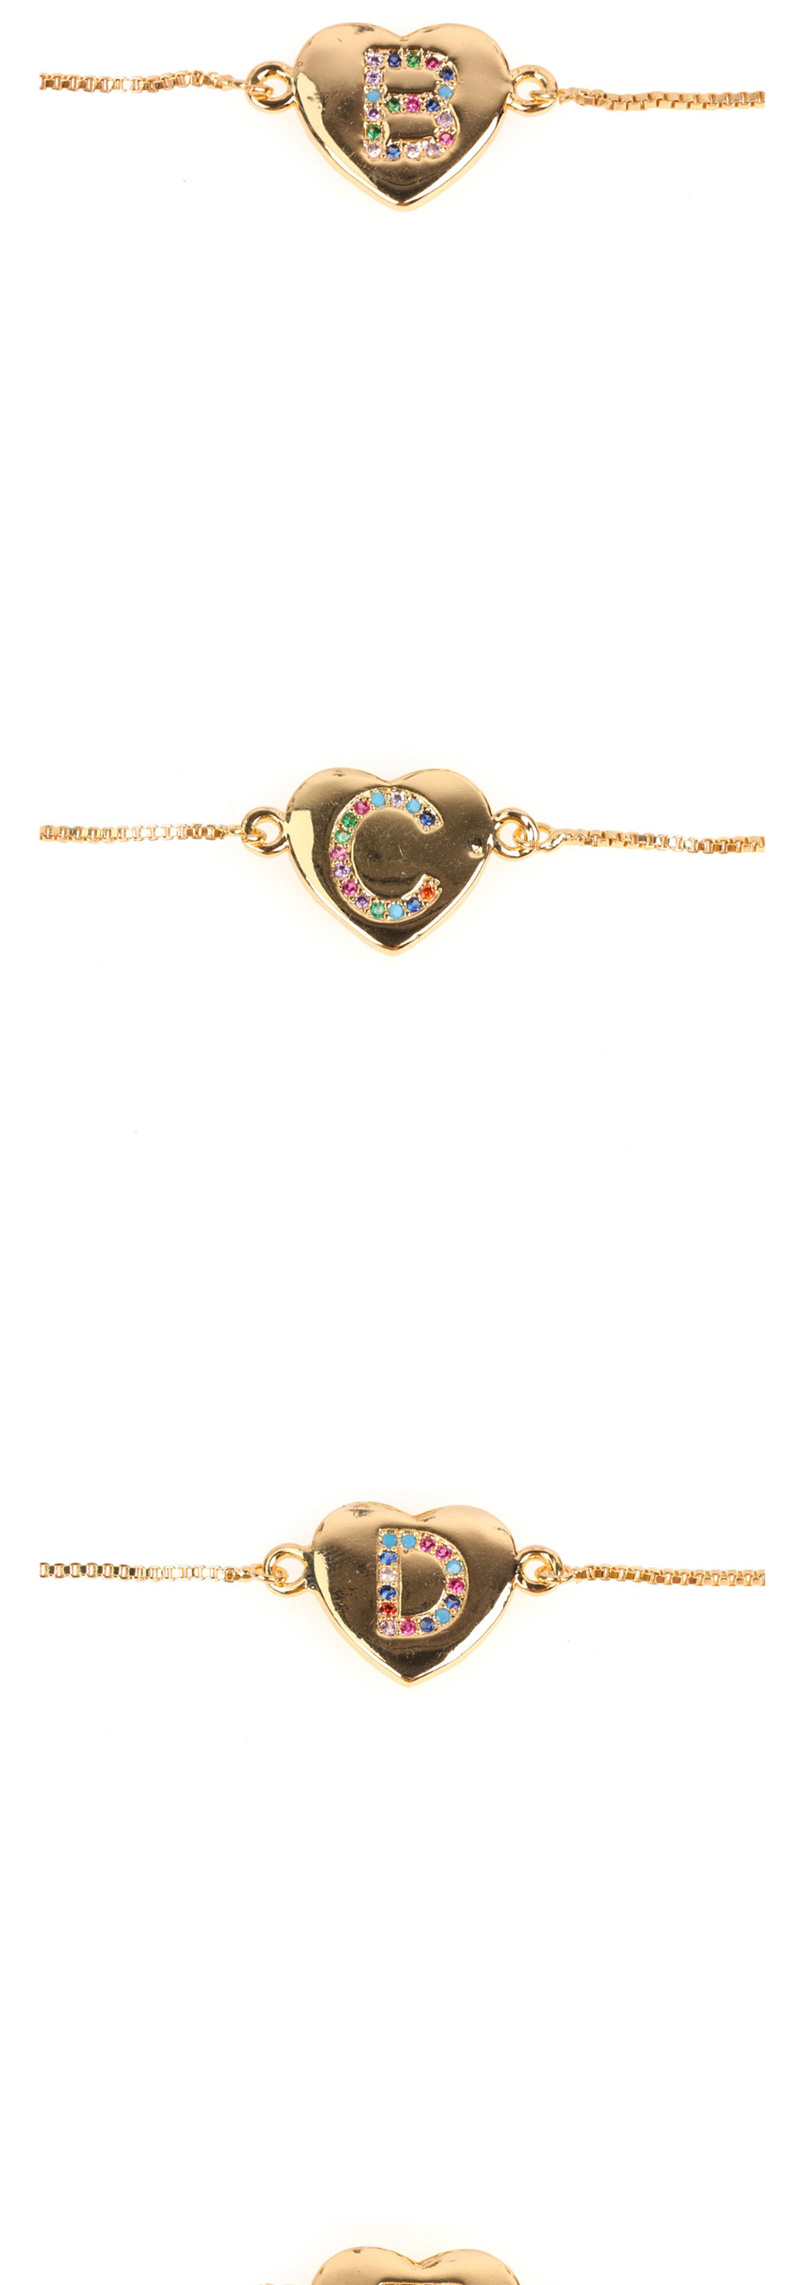 Fashion S Golden Heart Bracelet With Diamonds And Letters,Bracelets